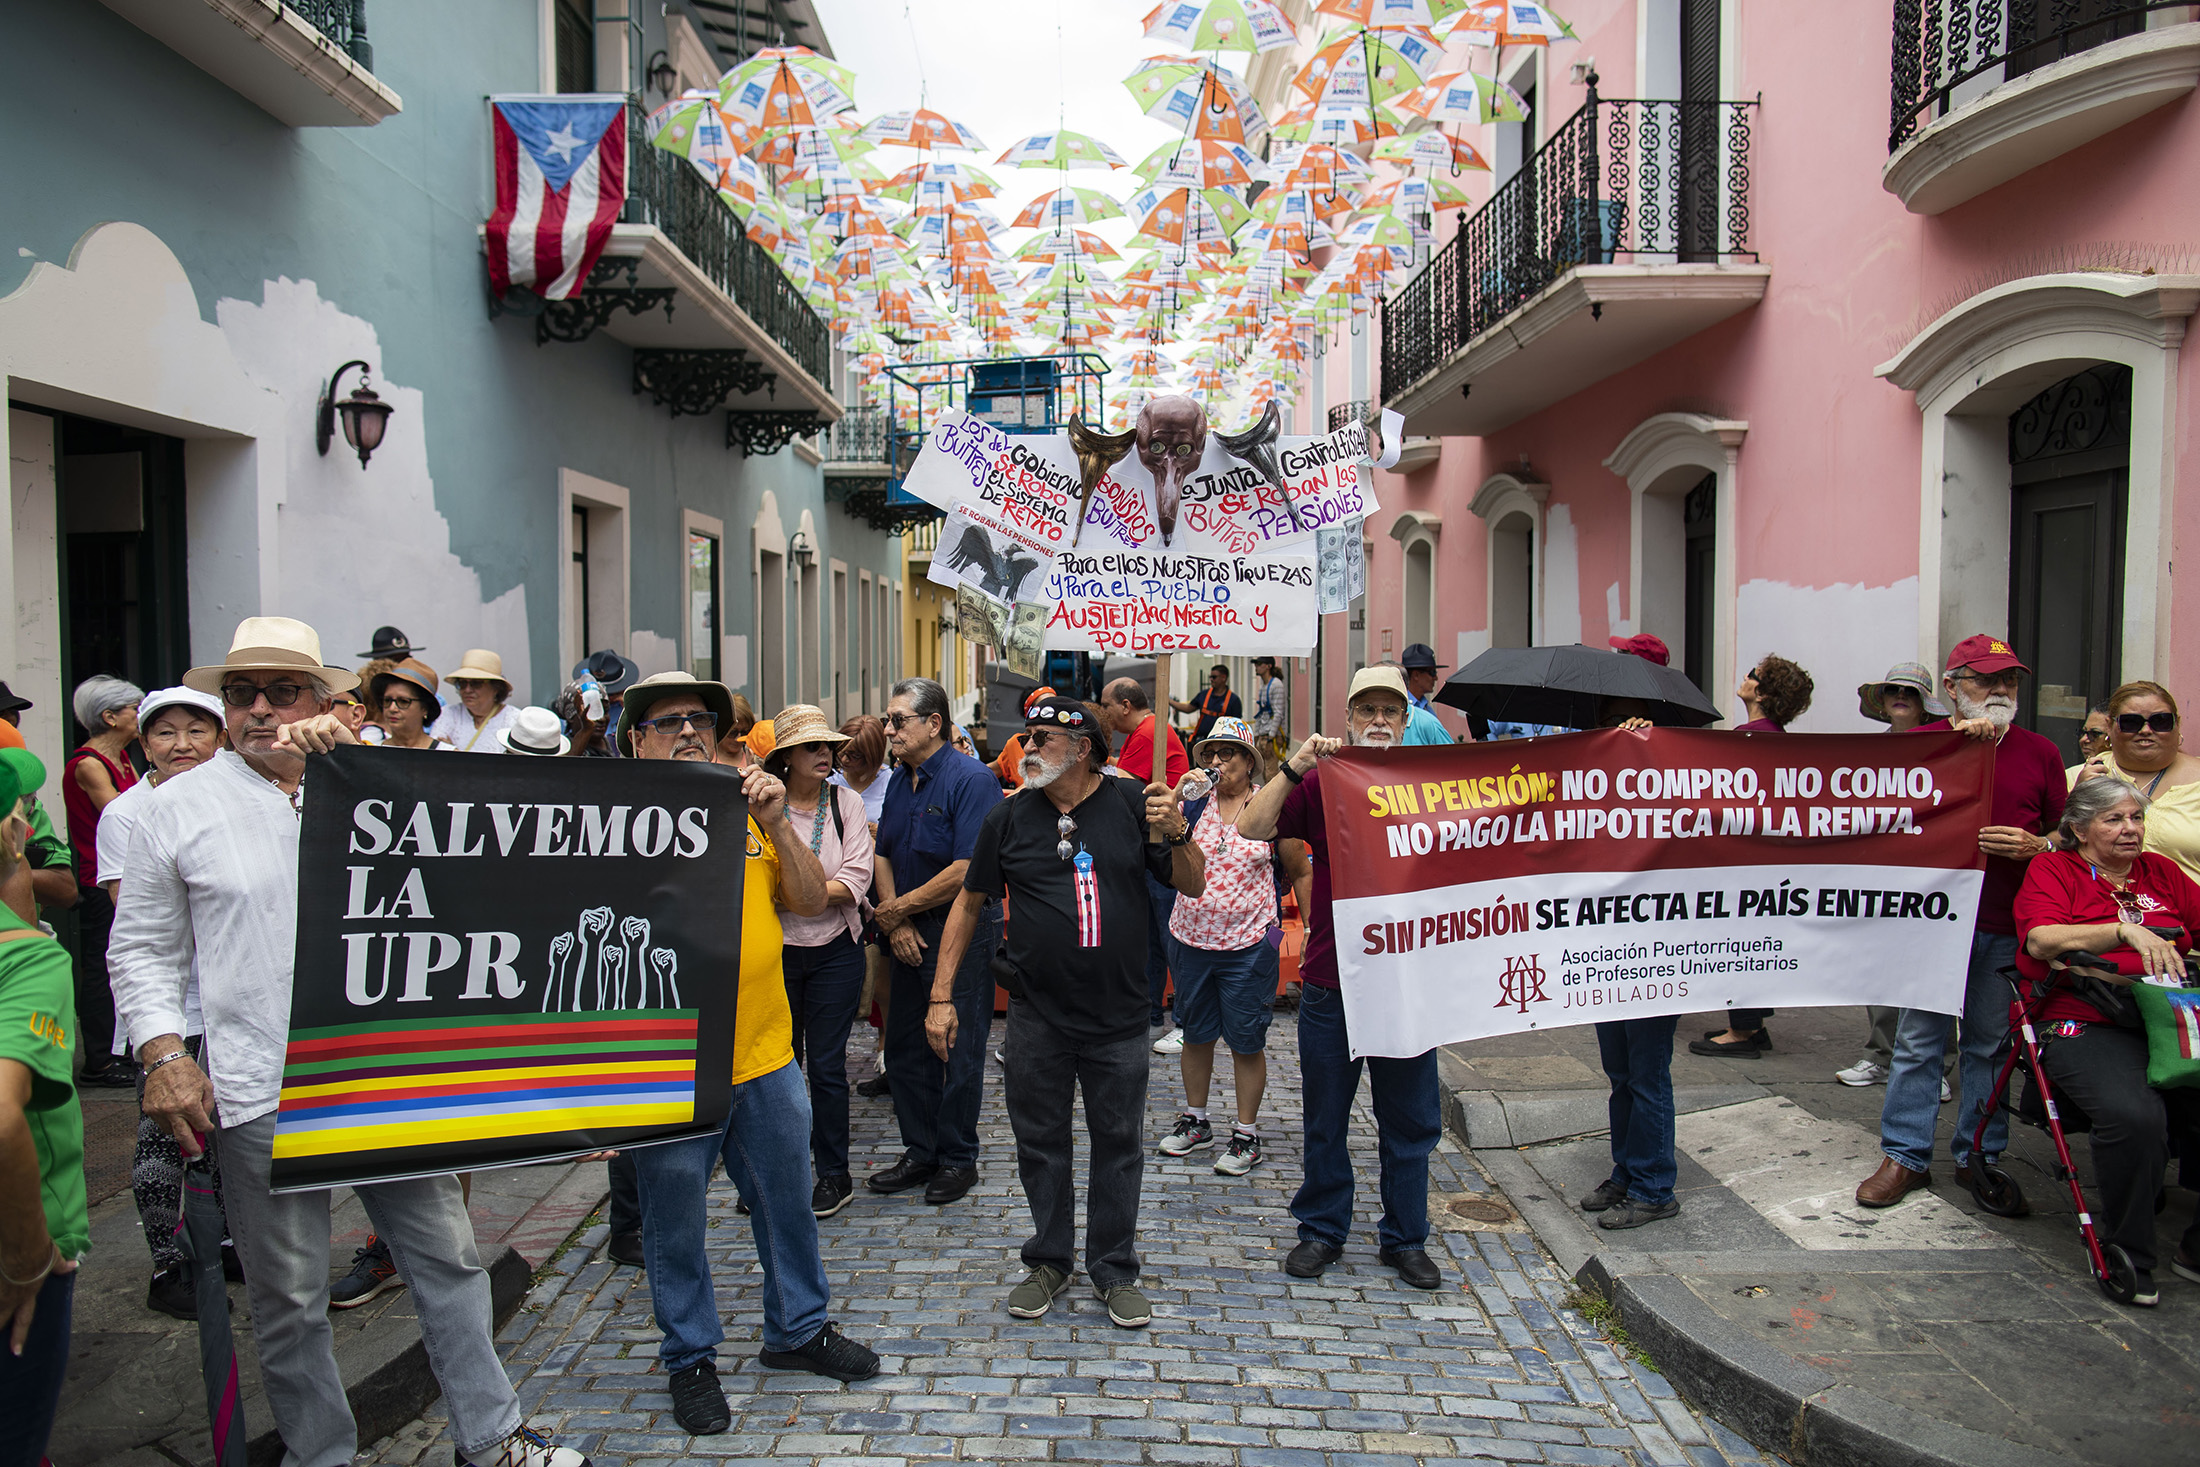 Demonstrators in San Juan on Sept. 30.